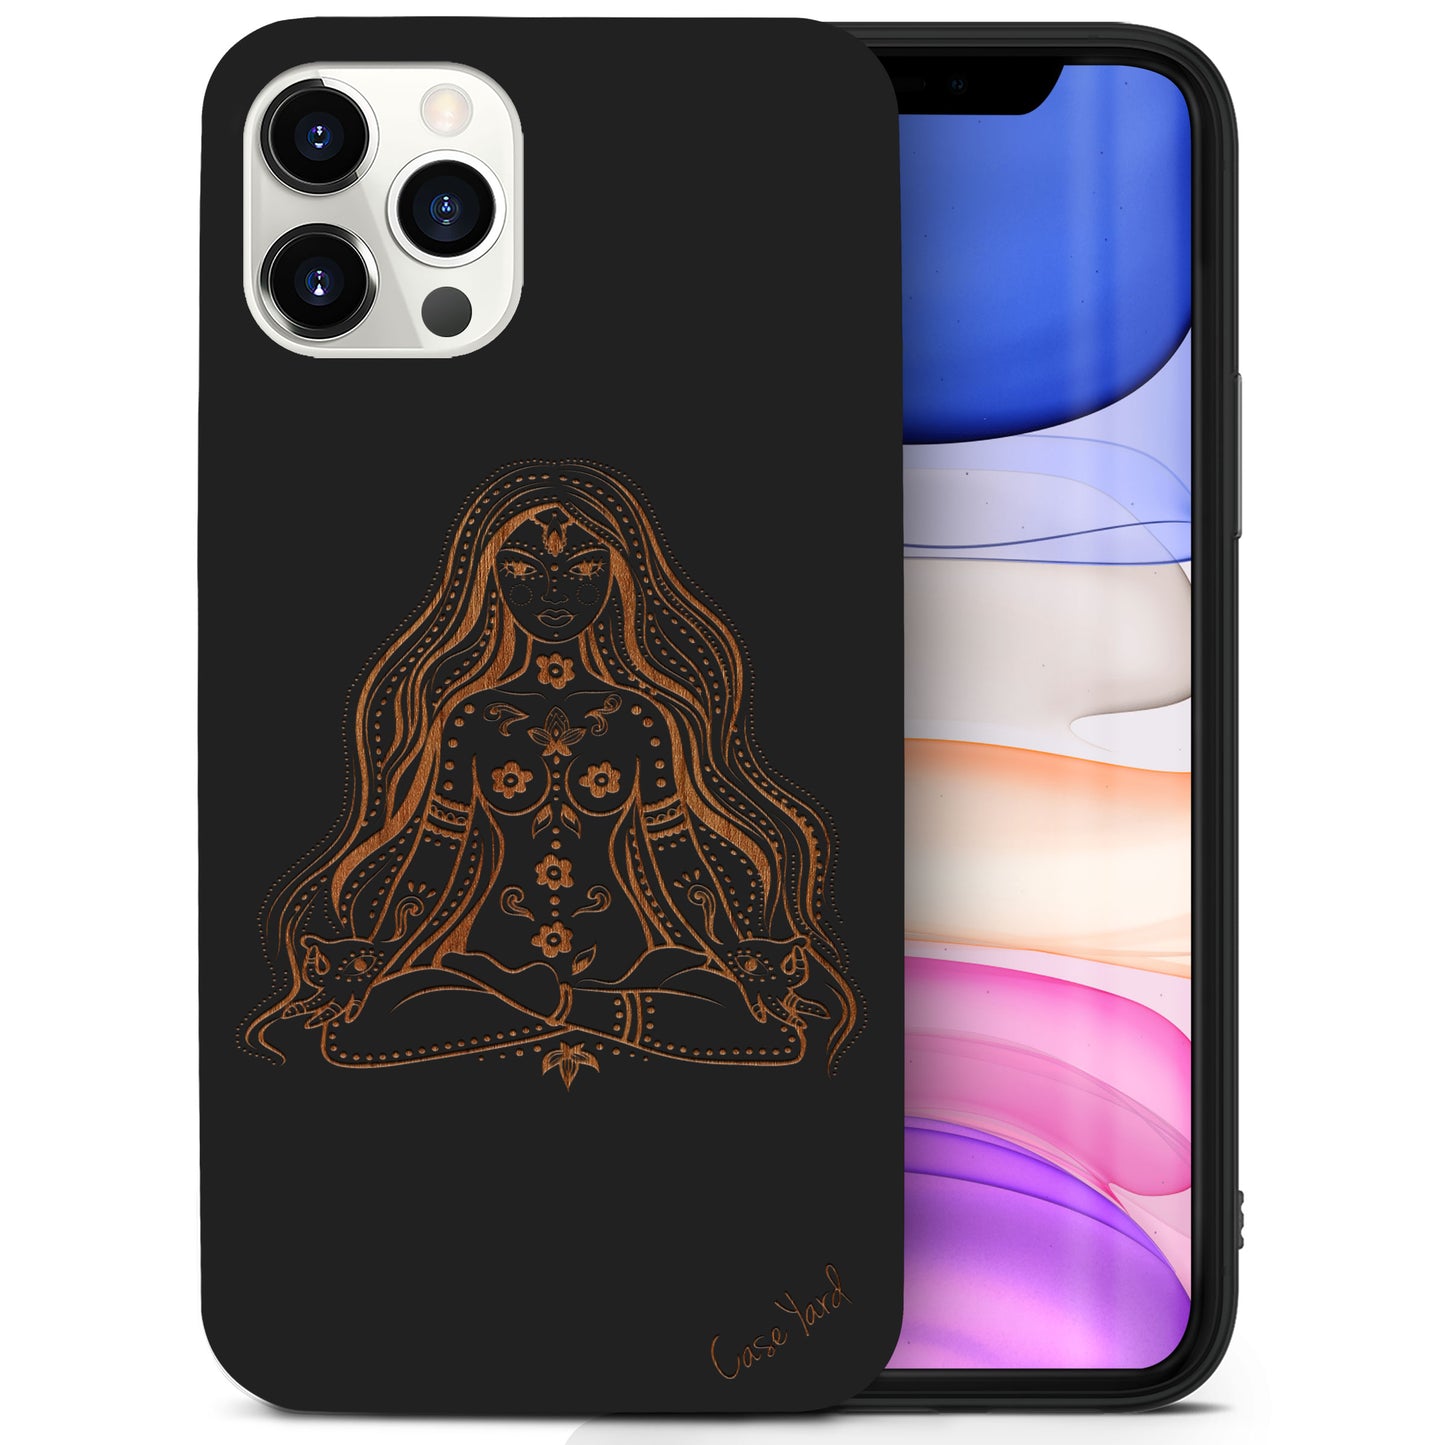 Wooden Cell Phone Case Cover, Laser Engraved case for iPhone & Samsung phone Hindu Bagdash Girl Design